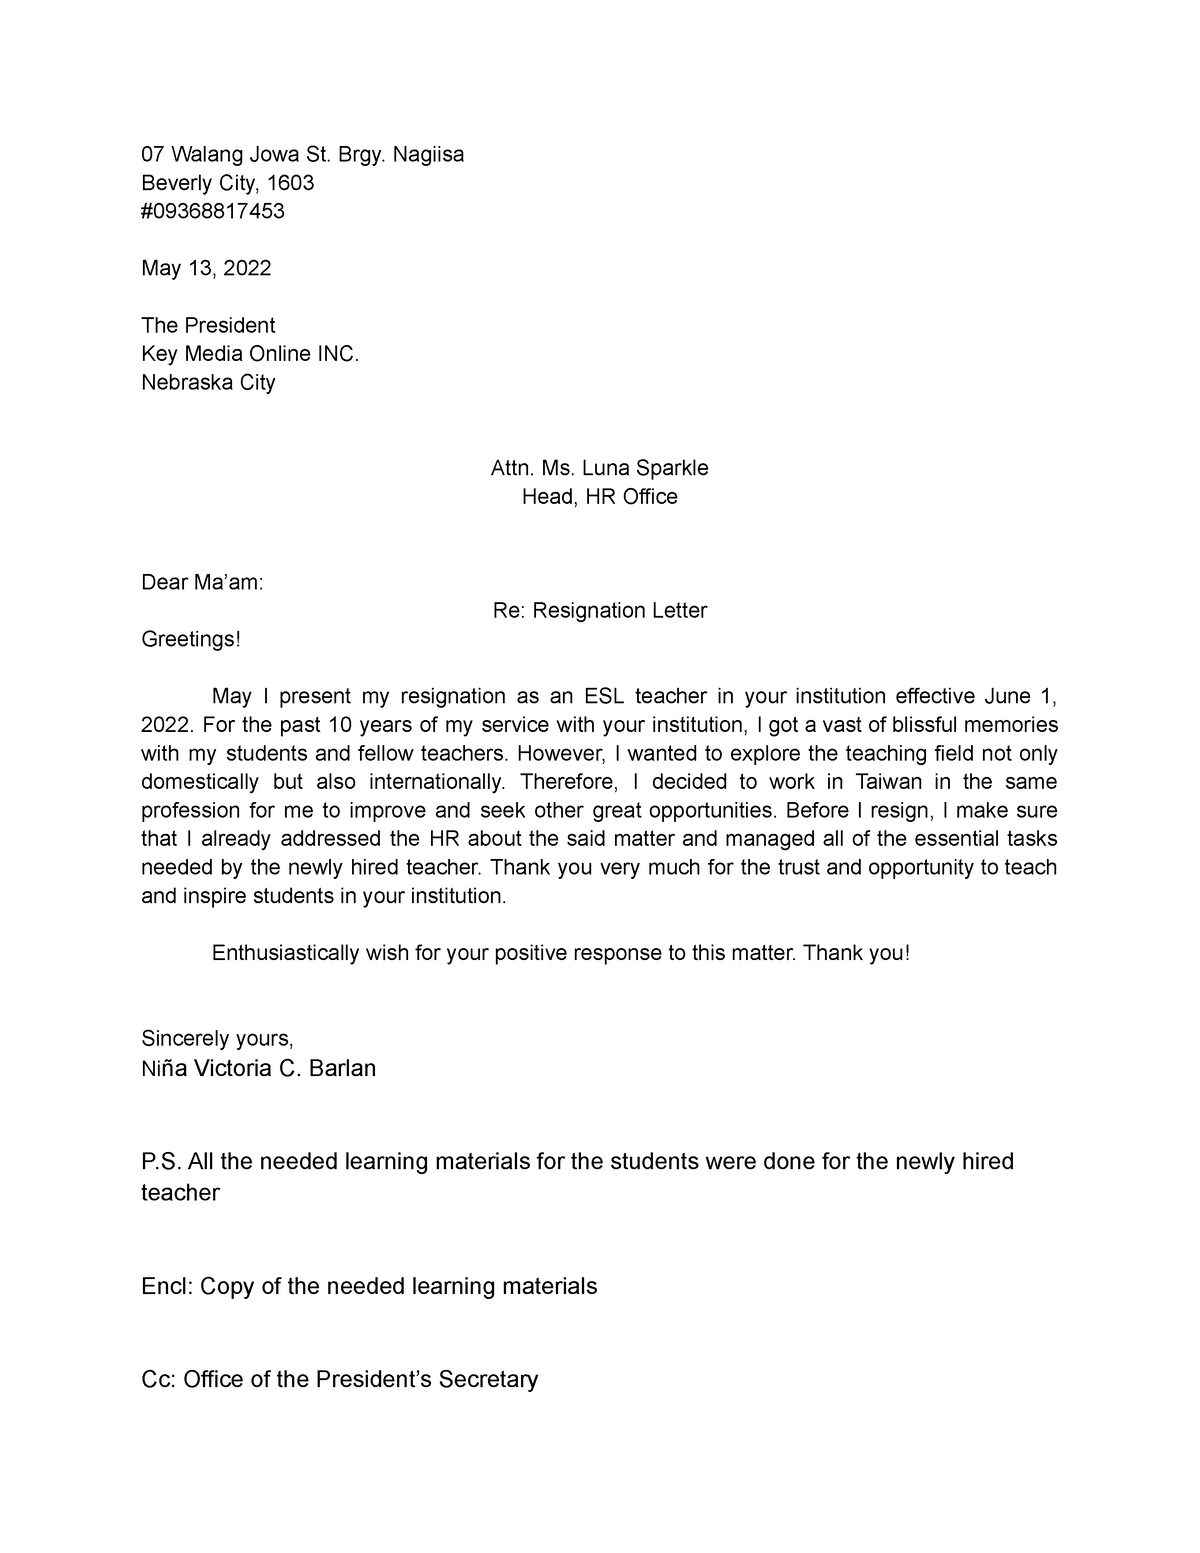 Resignation Letter - 07 Walang Jowa St. Brgy. Nagiisa Beverly City ...